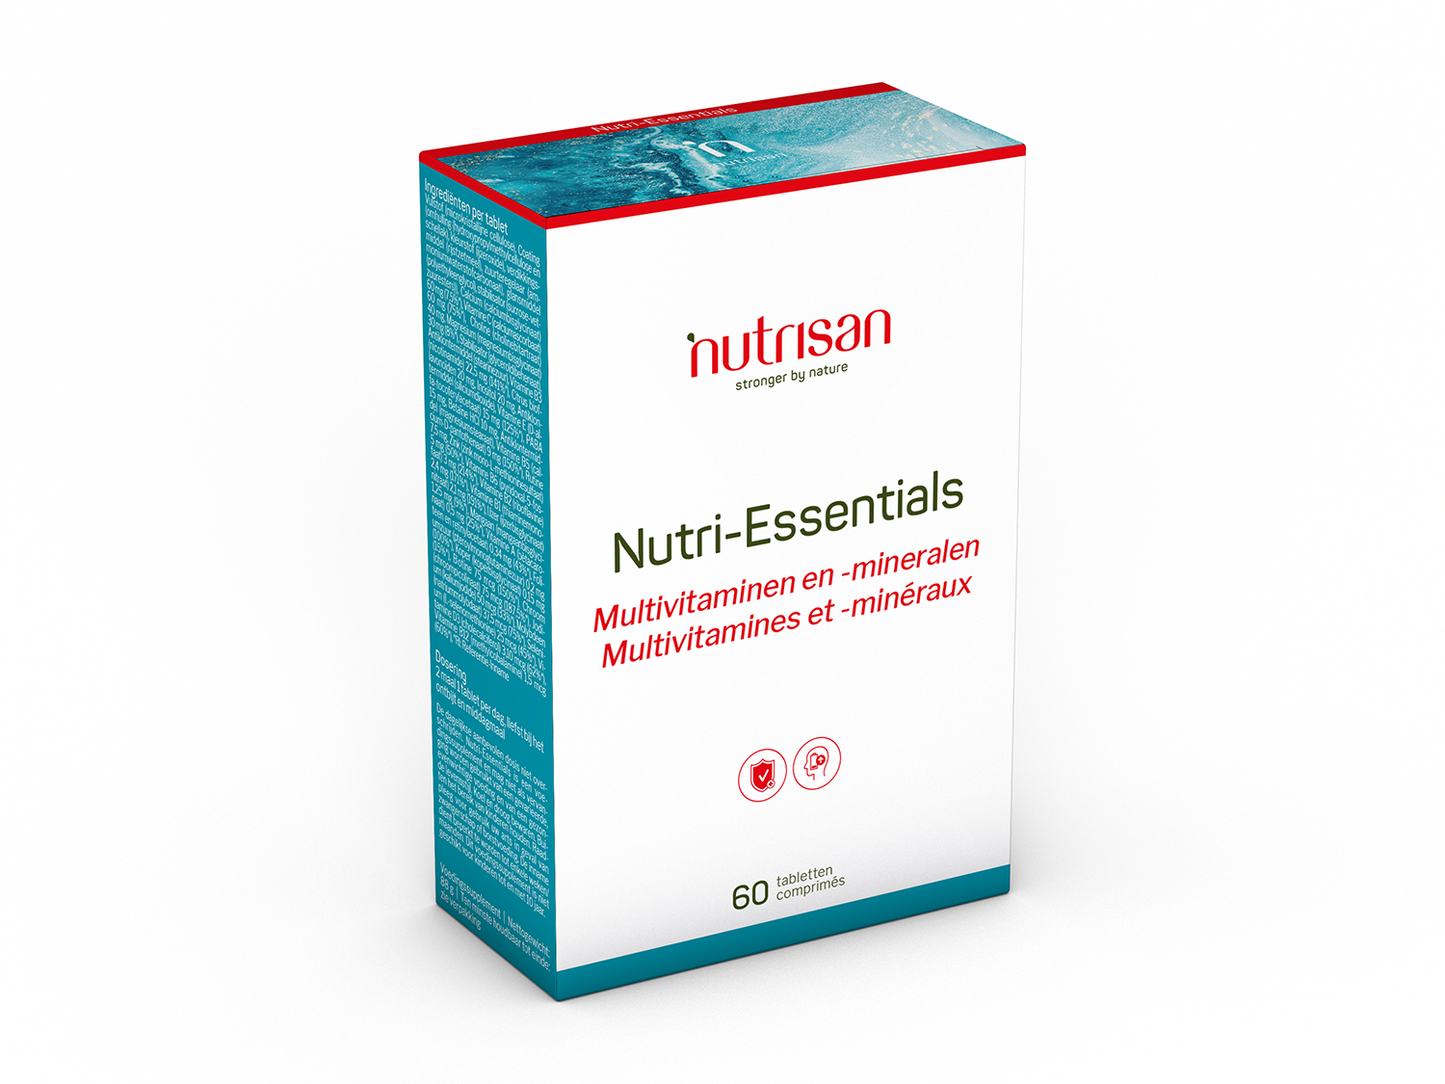 Nutrisan Nutri-Essentials - 60 tabletten - Multivitaminen en -mineralen